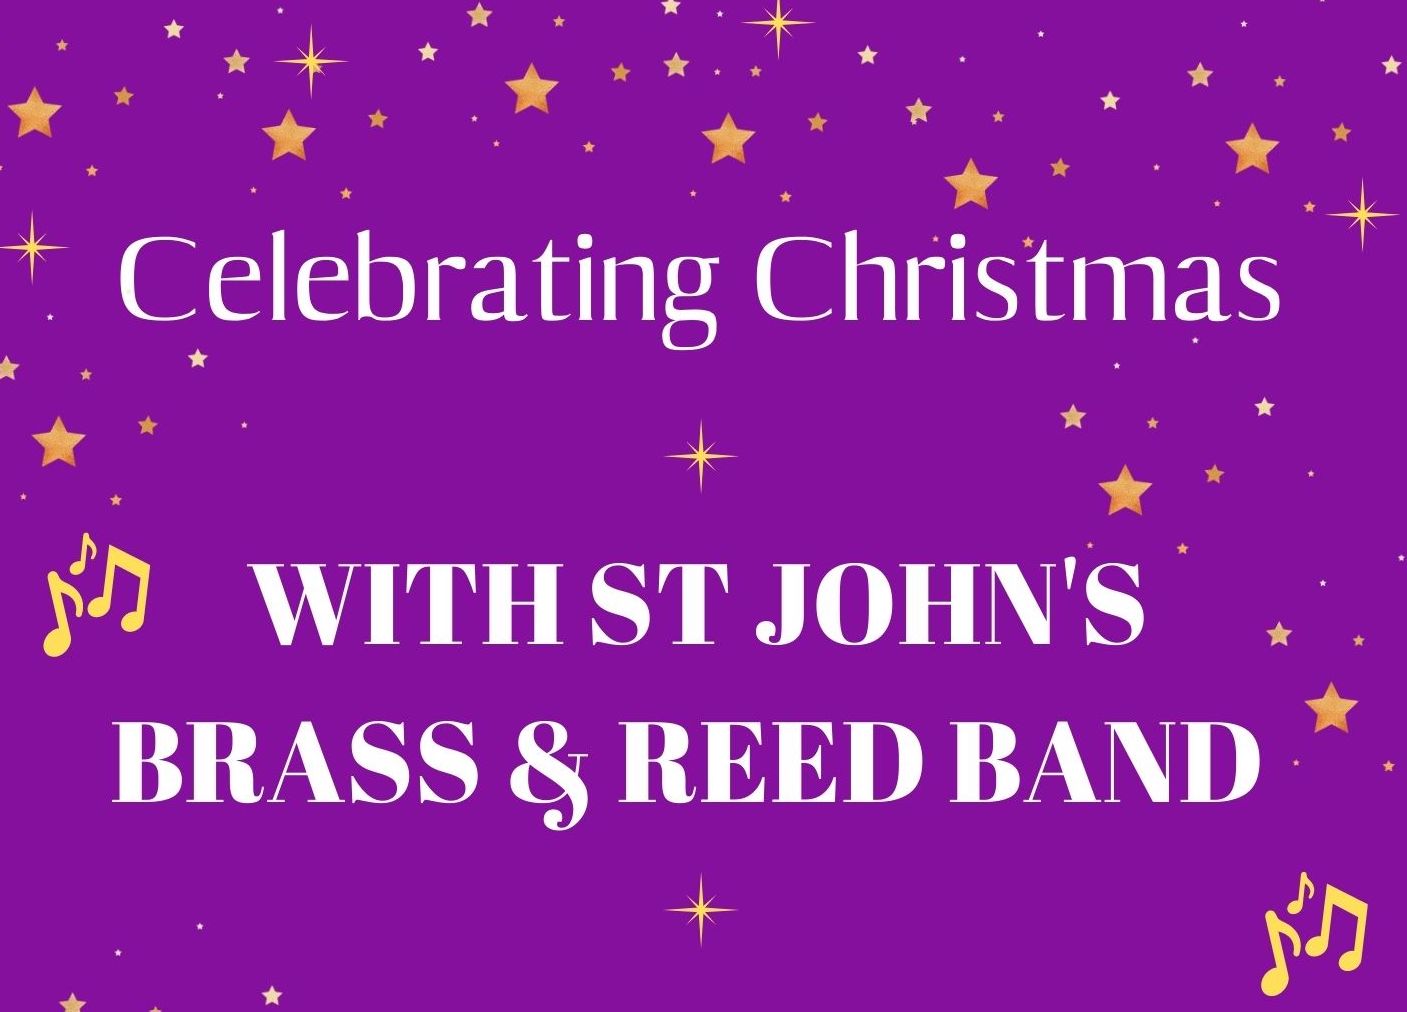 St John's Brass & Reed Band, Limerick